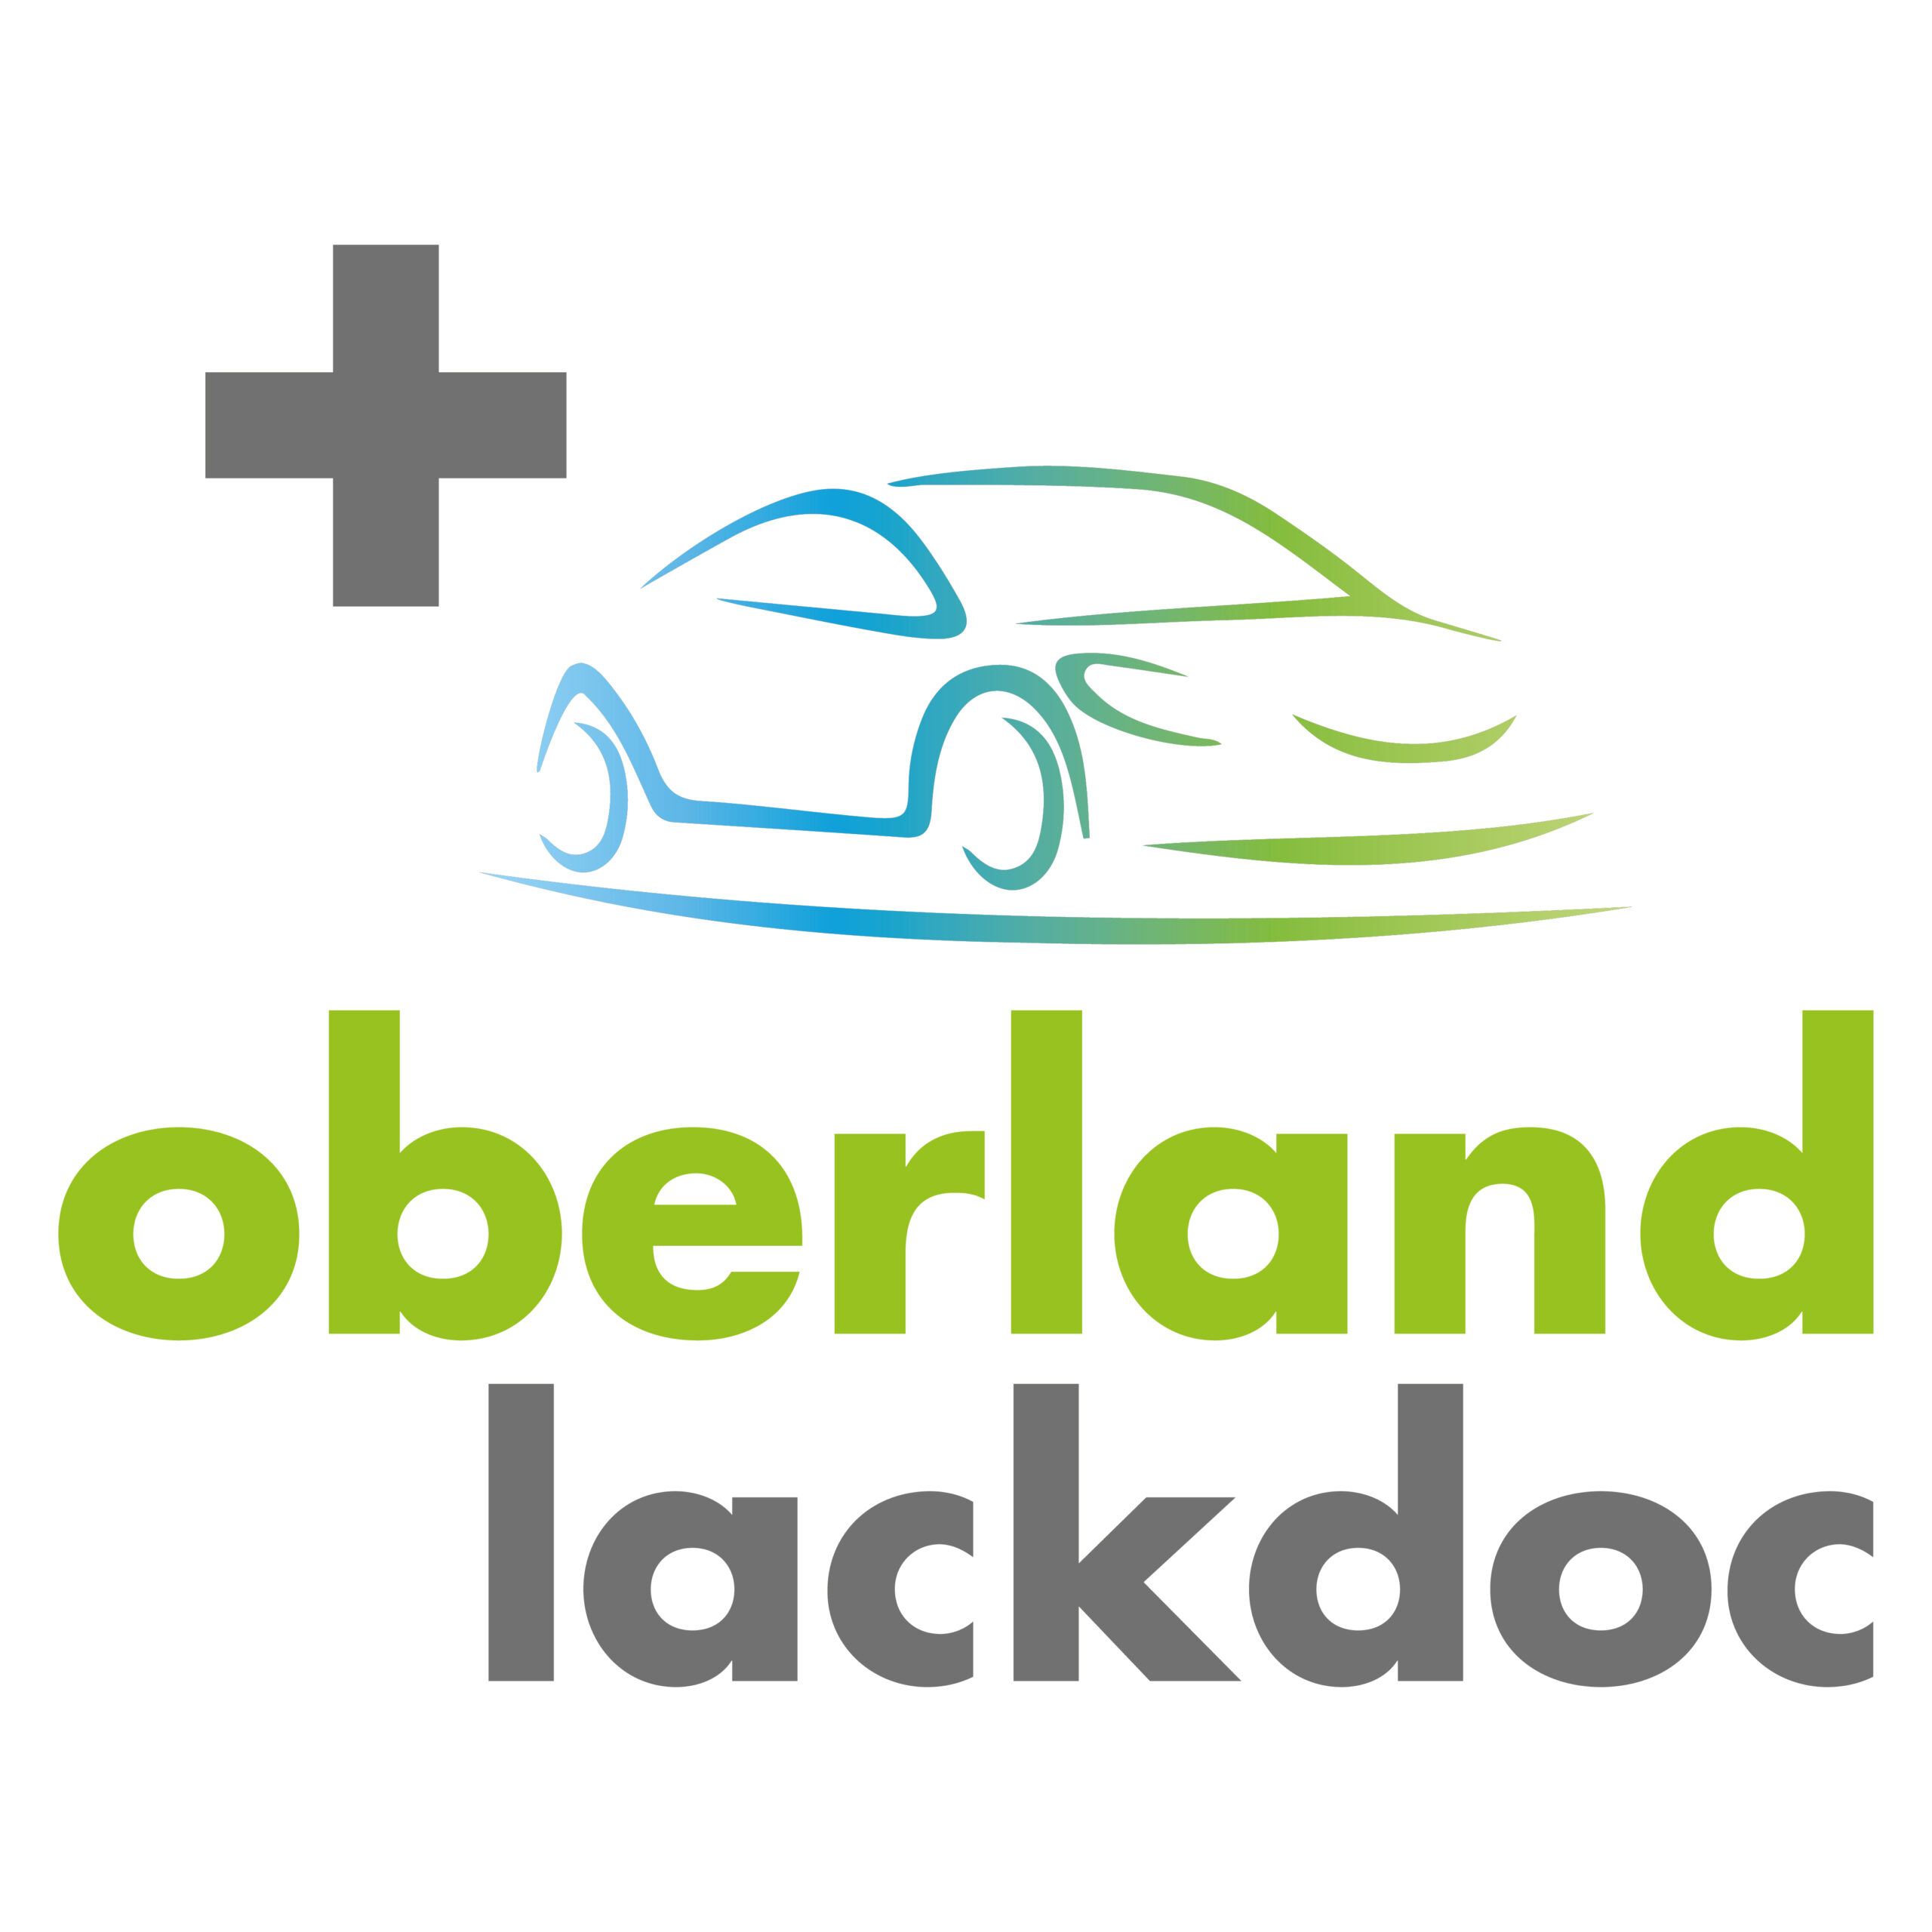 Oberland lackdoc